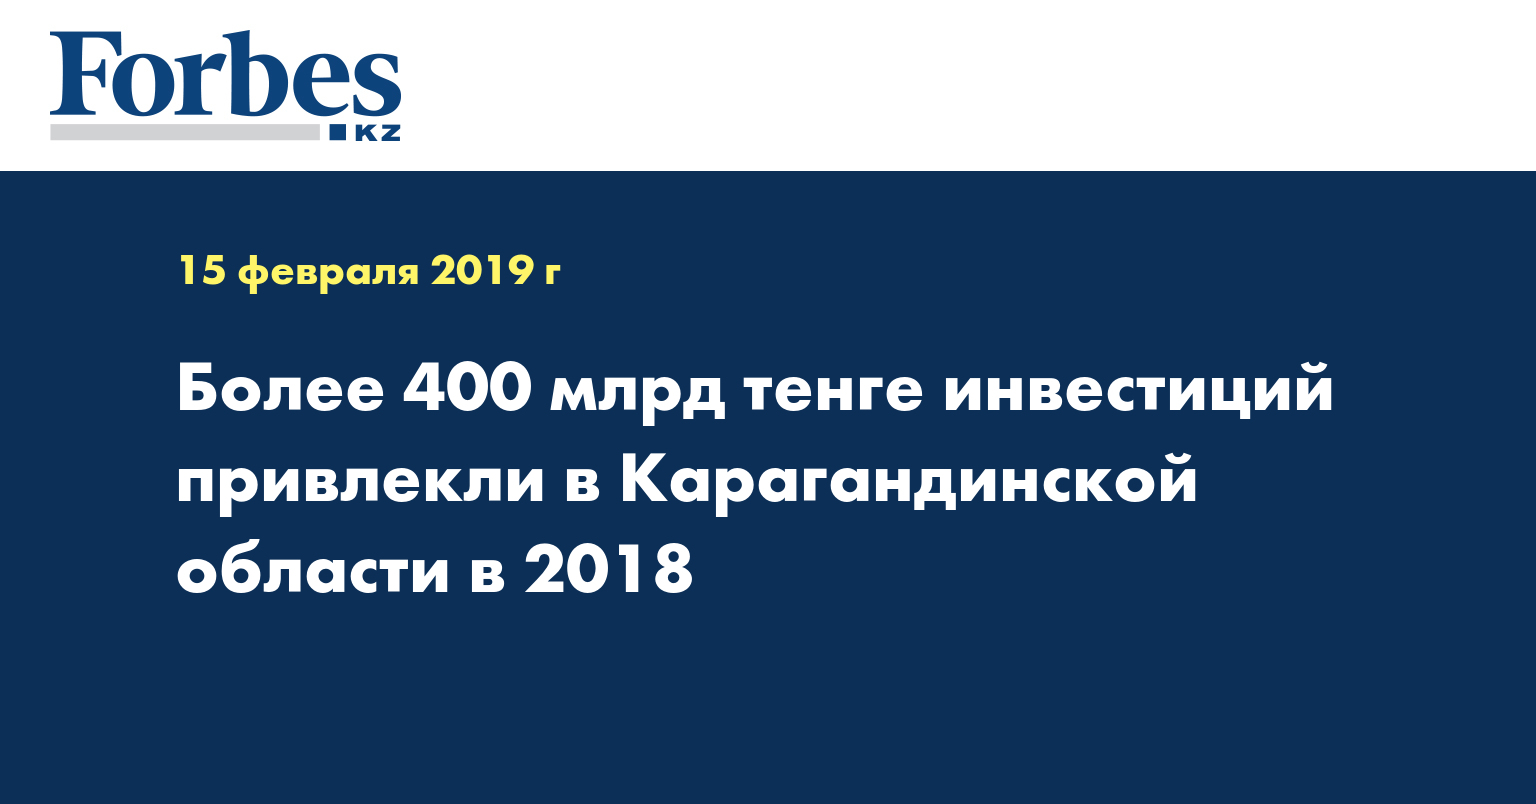 Более 400 млрд тенге инвестиций привлекли в Карагандинской области в 2018